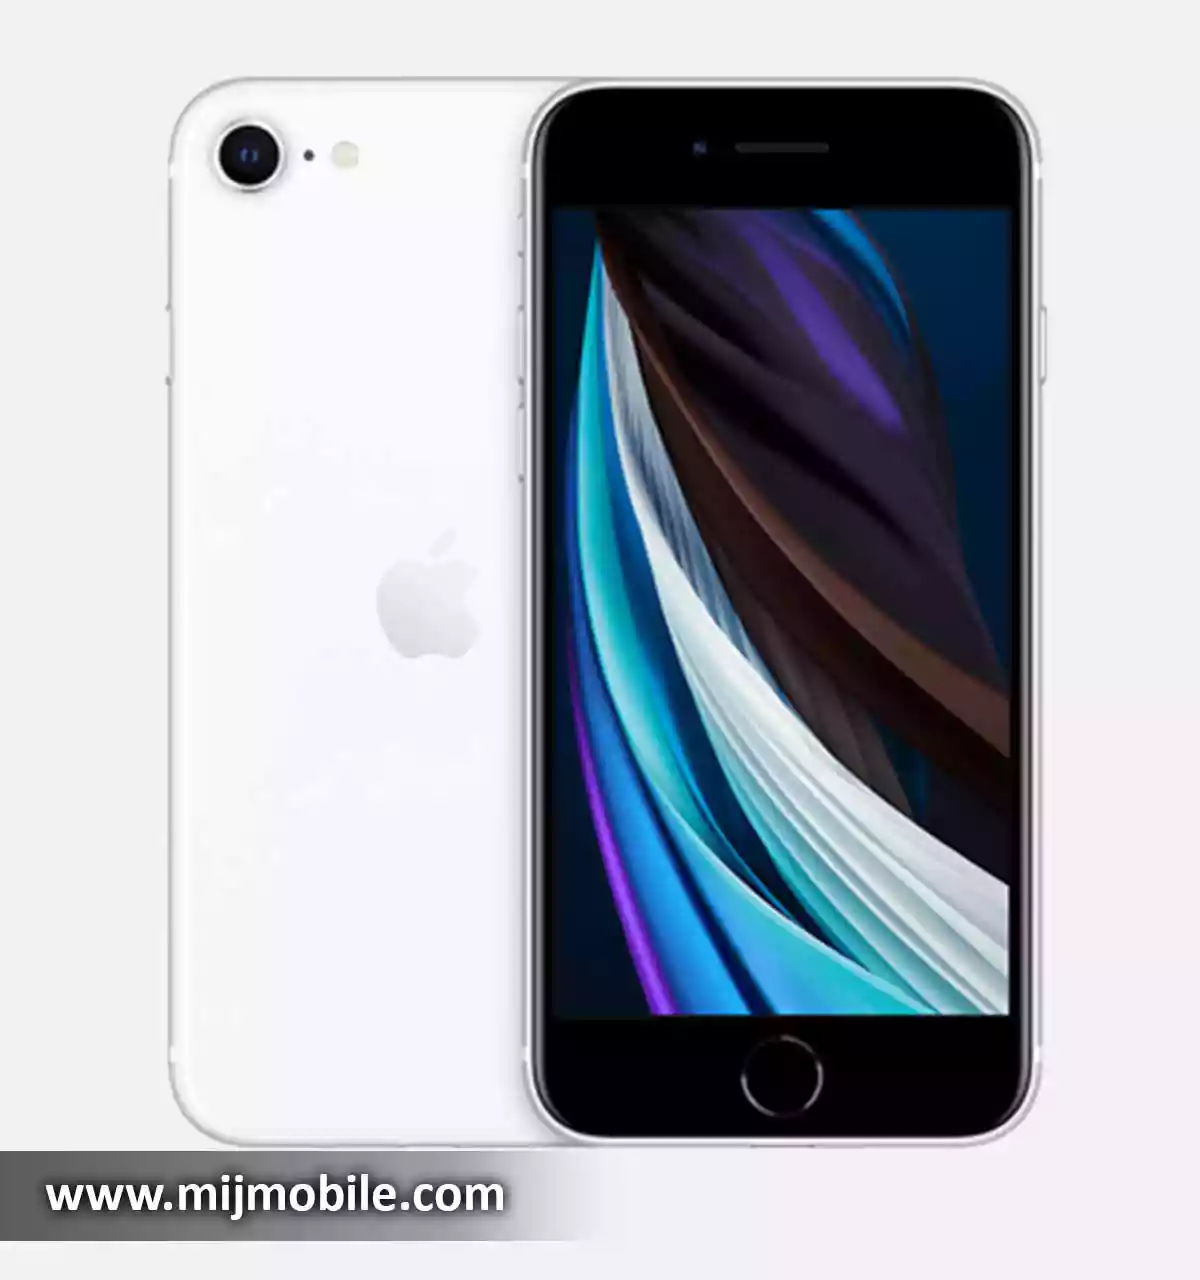 Apple iPhone SE 2020 Price in Pakistan